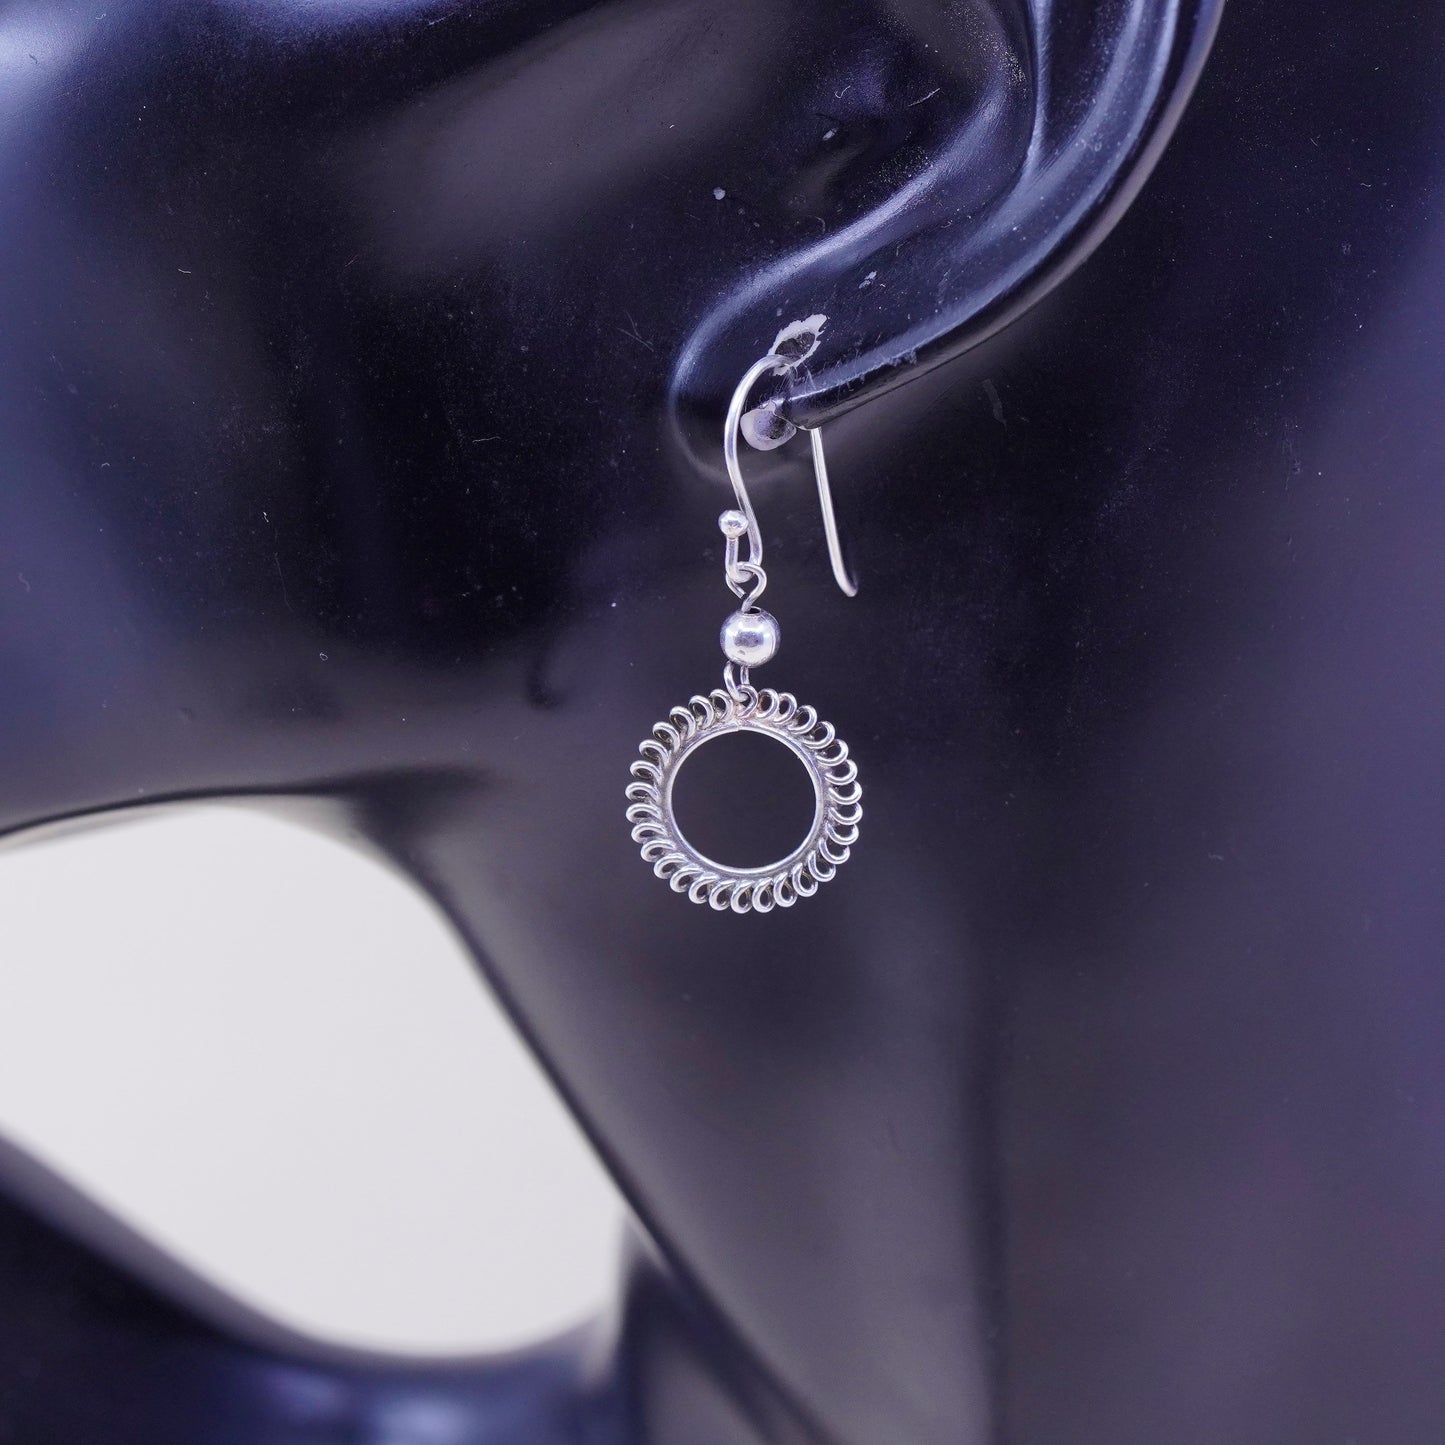 Vintage sterling silver handmade earrings, 925 textured circles dangle